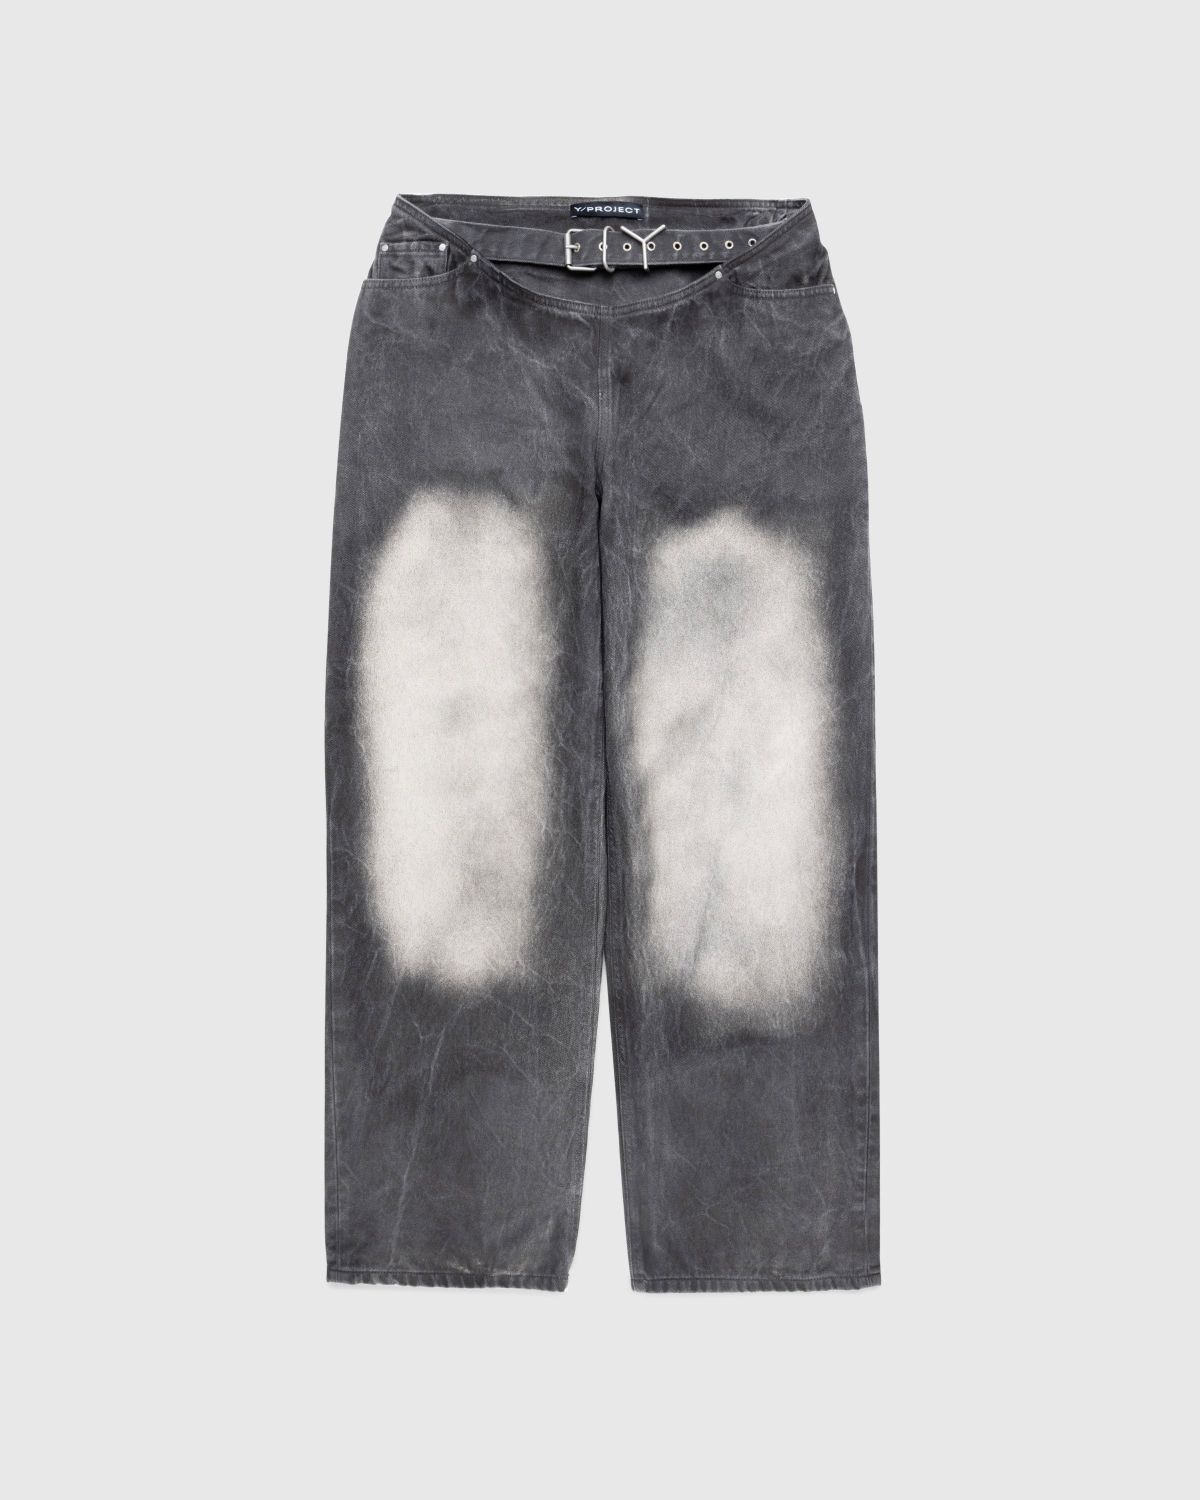 Y/Project – Y Belt Arc Jeans Faded Black - Pants - Grey - Image 1